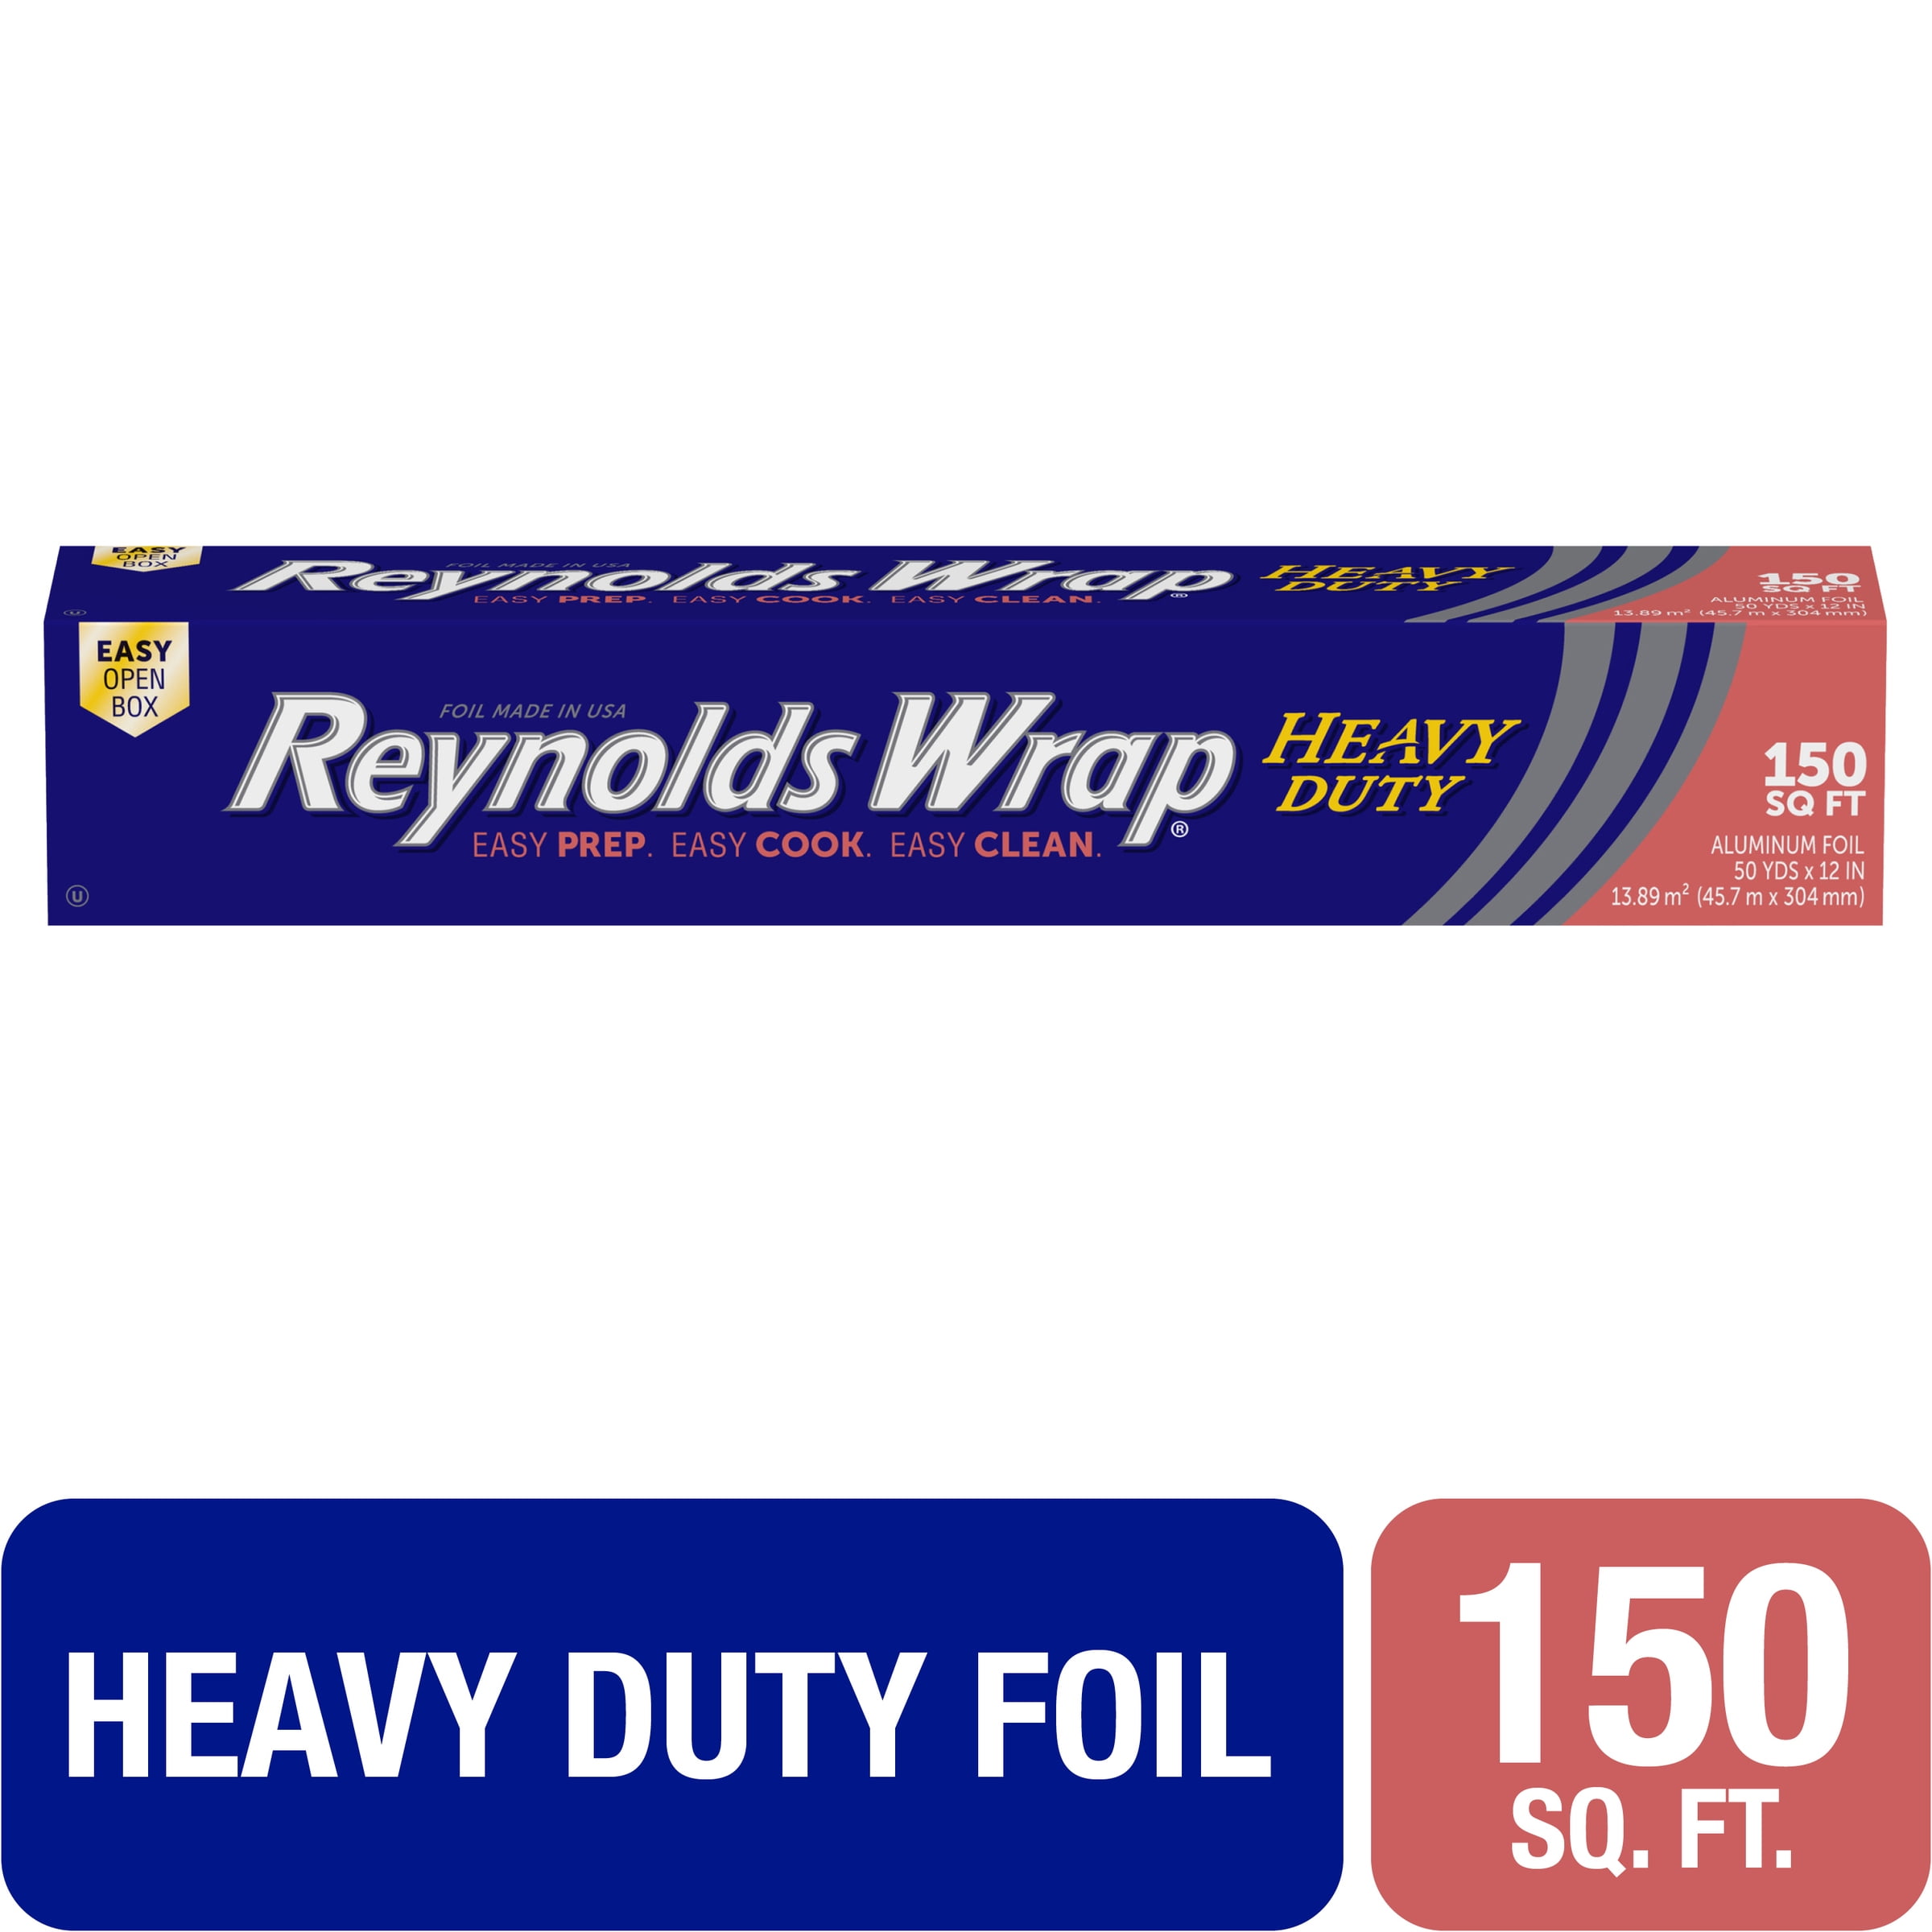 ft 2 ct. Reynolds Wrap 18" Heavy Duty Aluminum Foil 150 sq 